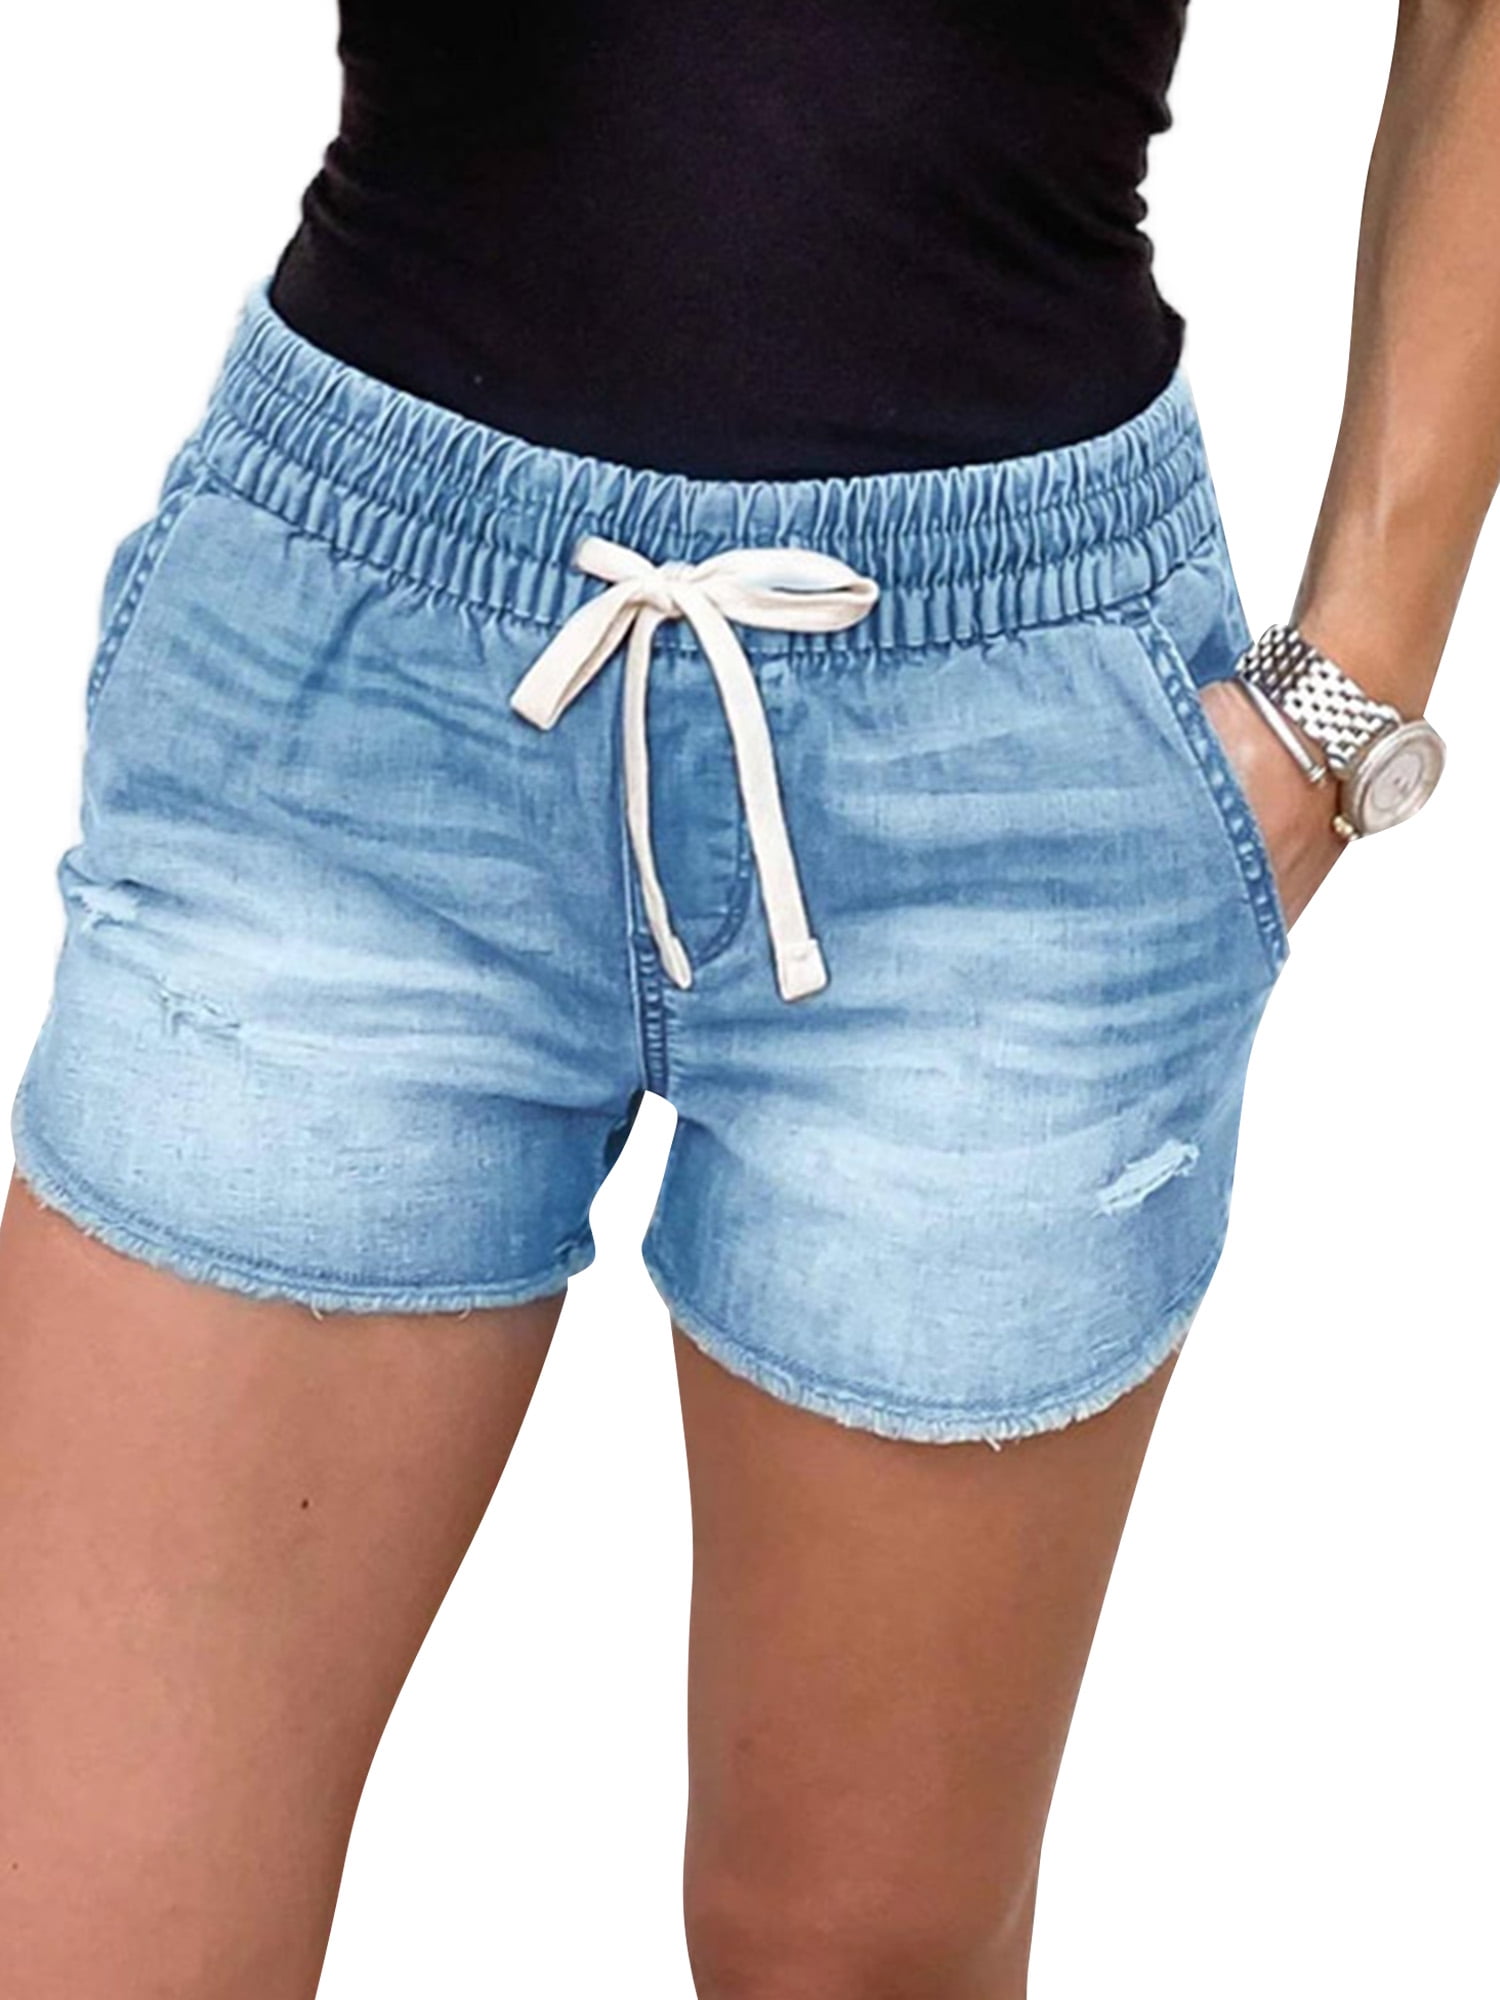 Women Short Pants,Teen Girls Casual Ripped Jeans Pants Ladies Beach Shorts Denim Shorts Solid Summer Walking Shorts 